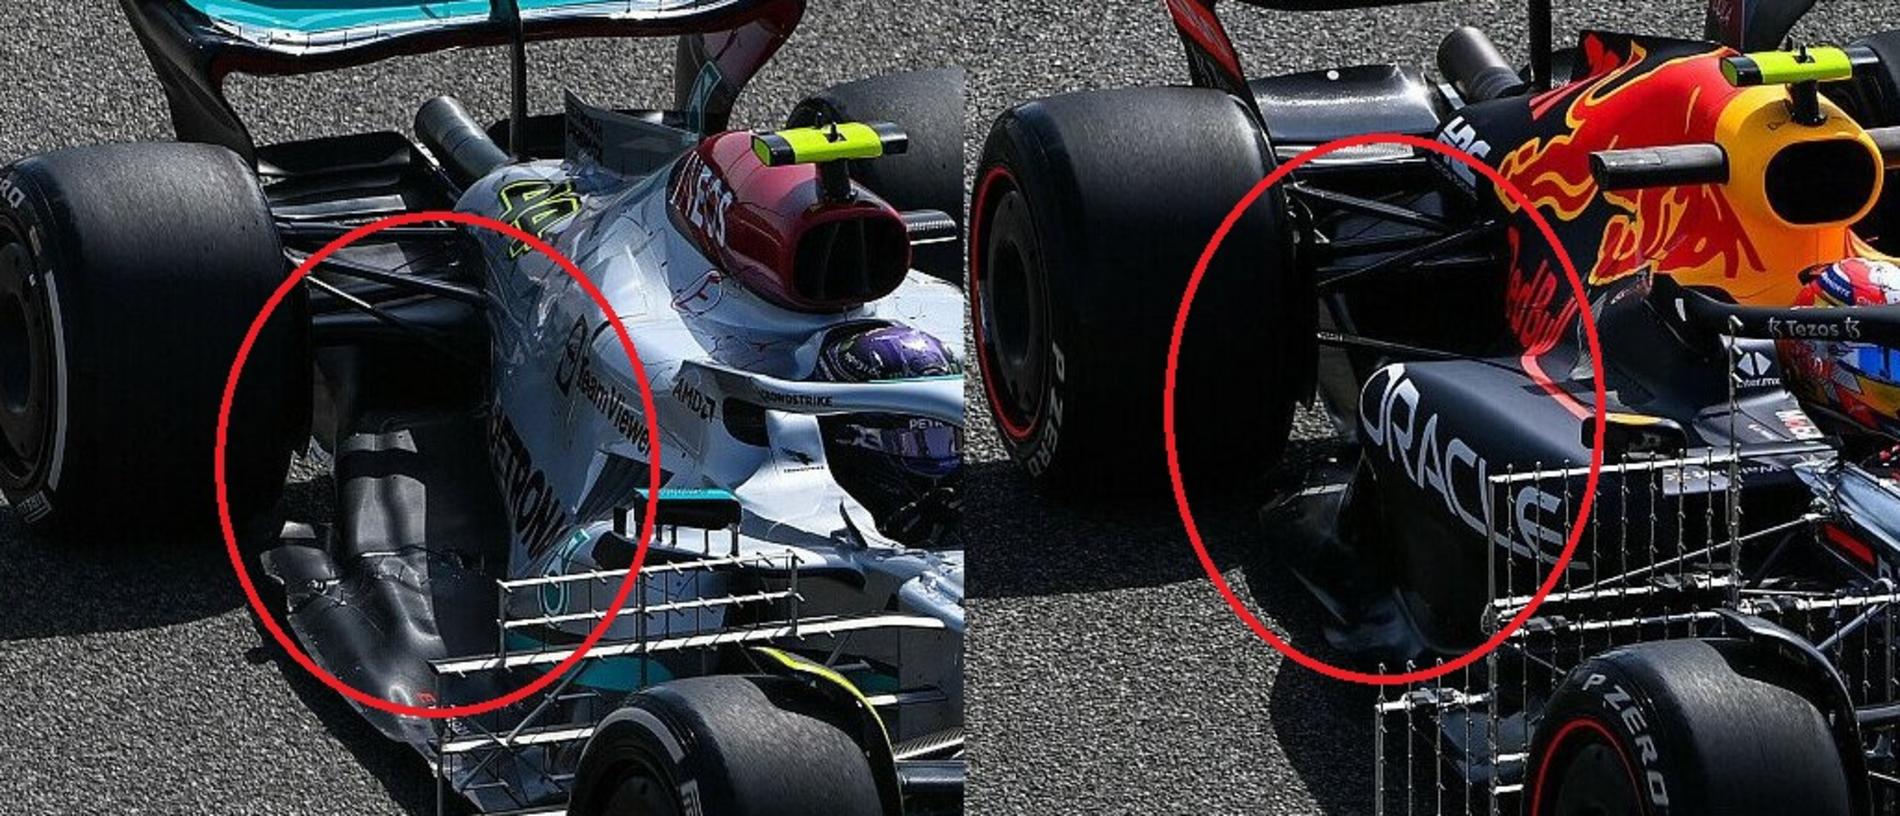 F1 22 Bahrain Testing Times Result News Mercedes No Sidepod Design Explained Red Bull Daniel Ricciardo Sick